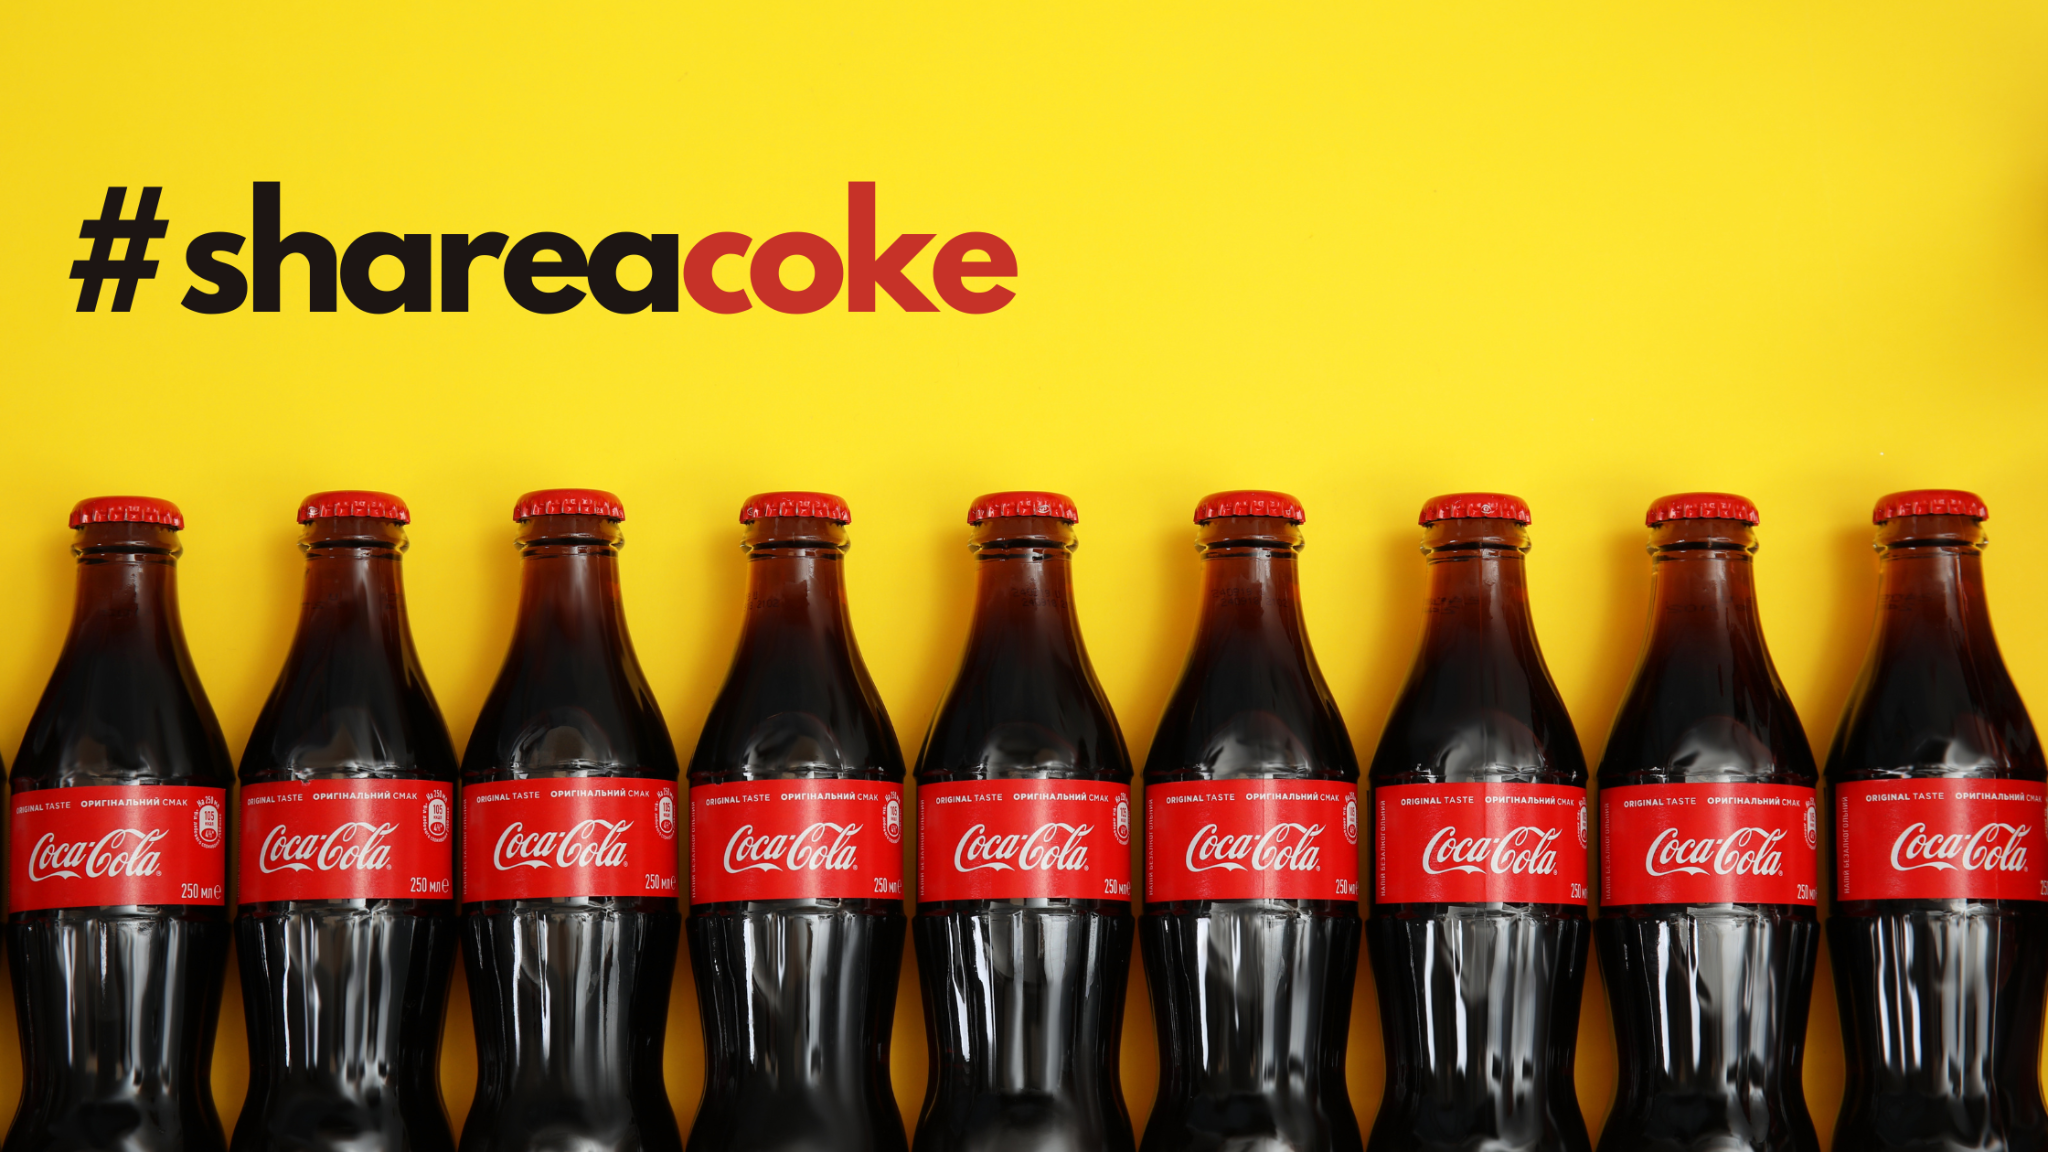 marketing case study share a coke